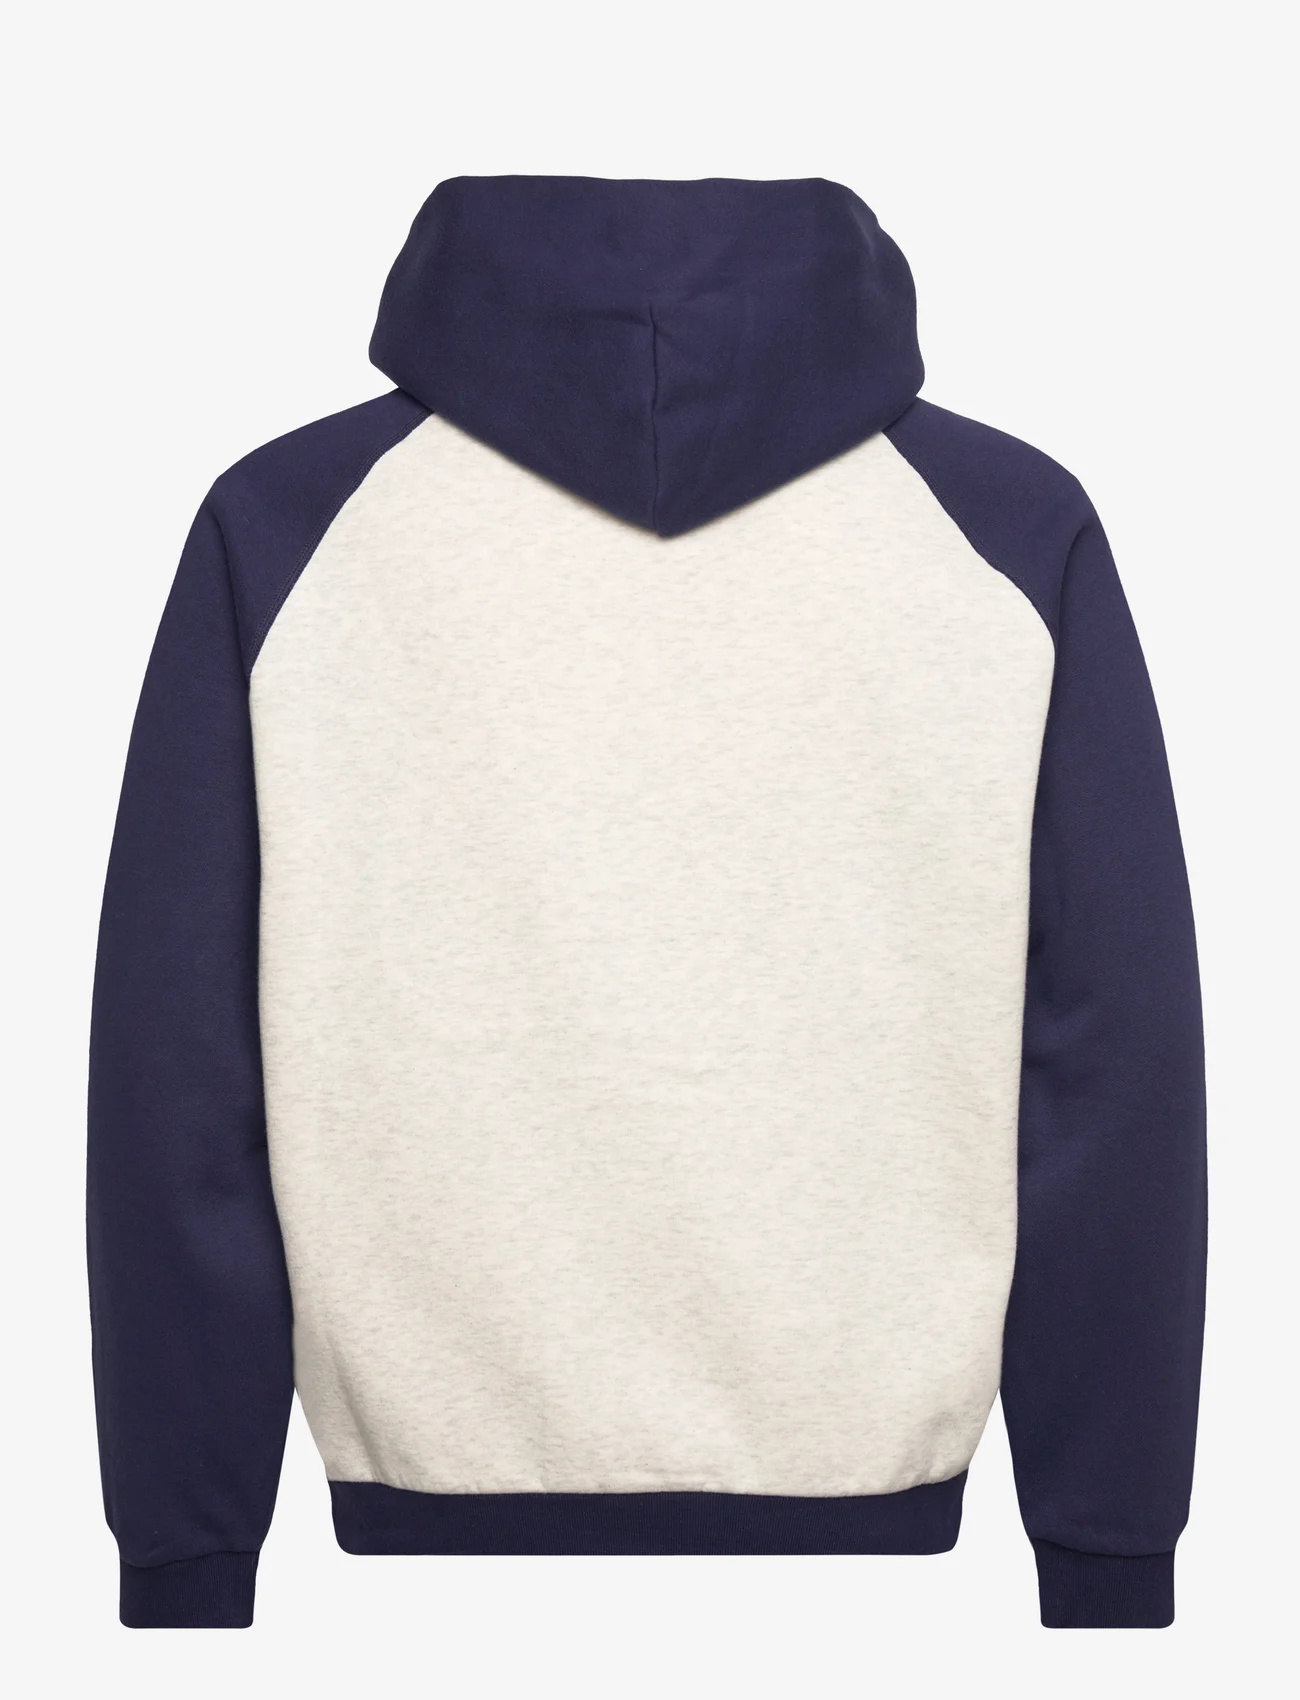 Champion - Hooded Sweatshirt - kapuzenpullover - gray melange  light - 1